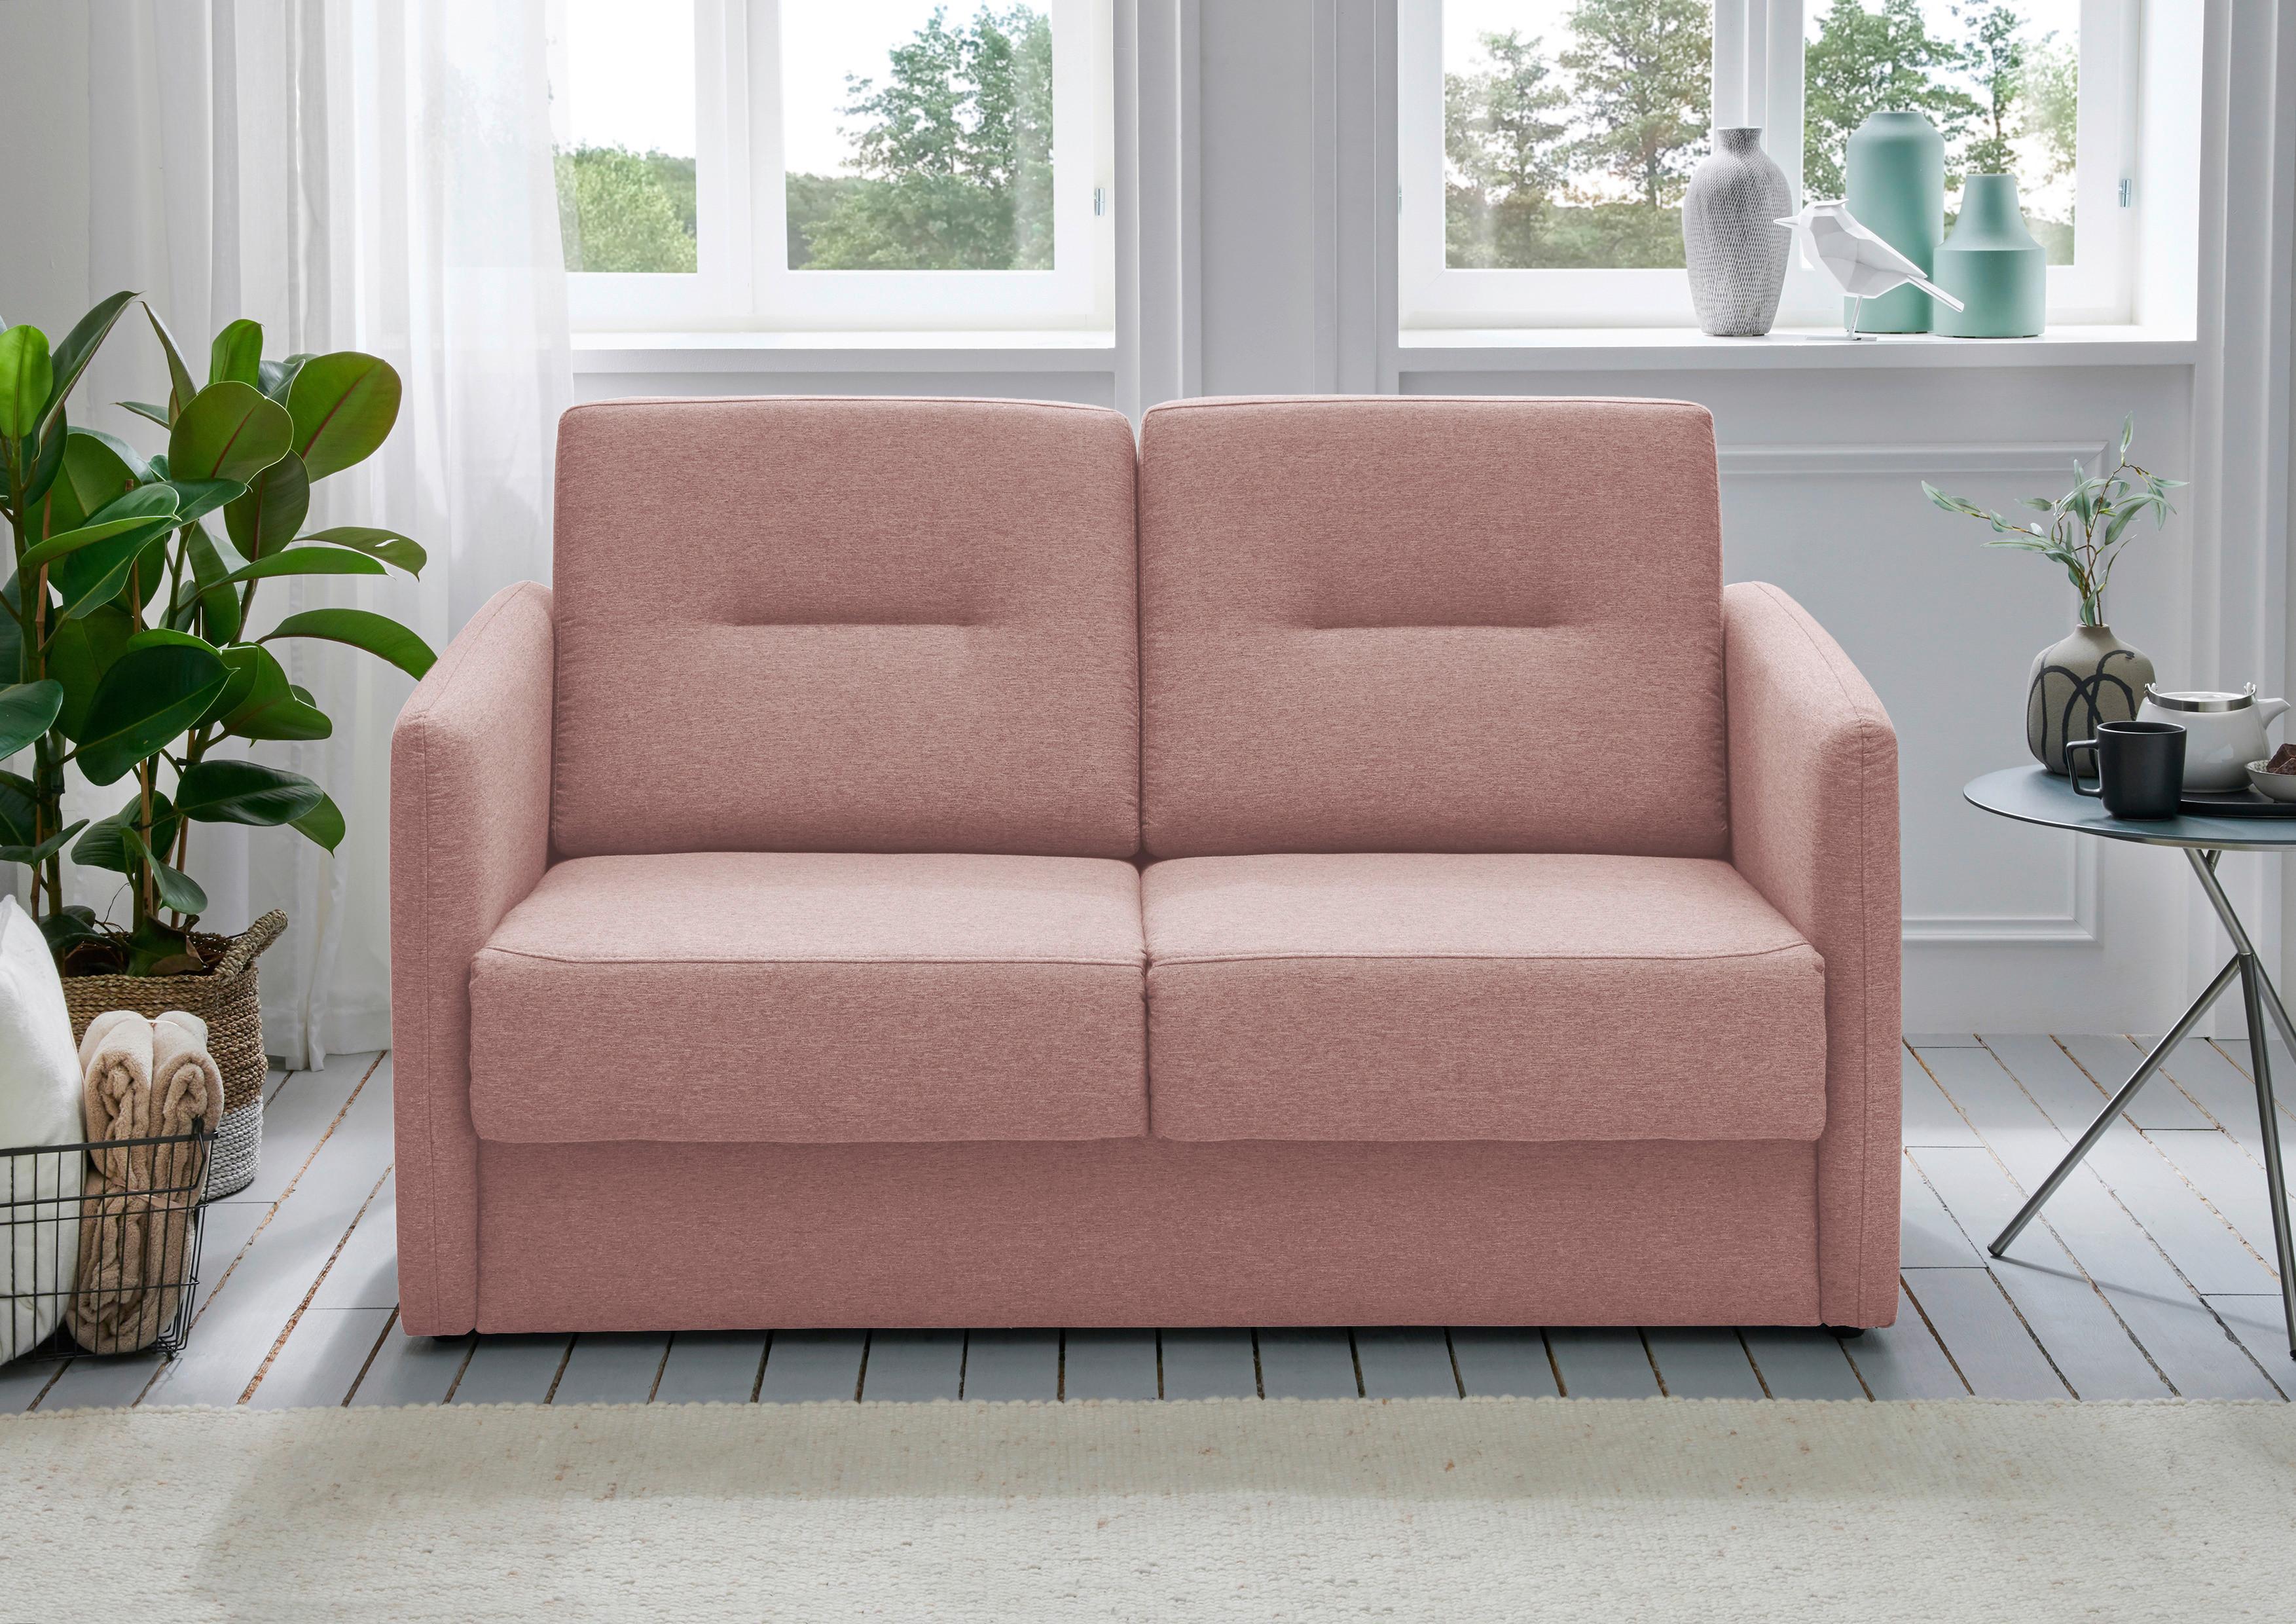 2-Sitzer-Sofa mit Schlaffunkt. Regi Rosa - Schwarz/Rosa, KONVENTIONELL, Holz/Textil (147/89/87cm) - Livetastic